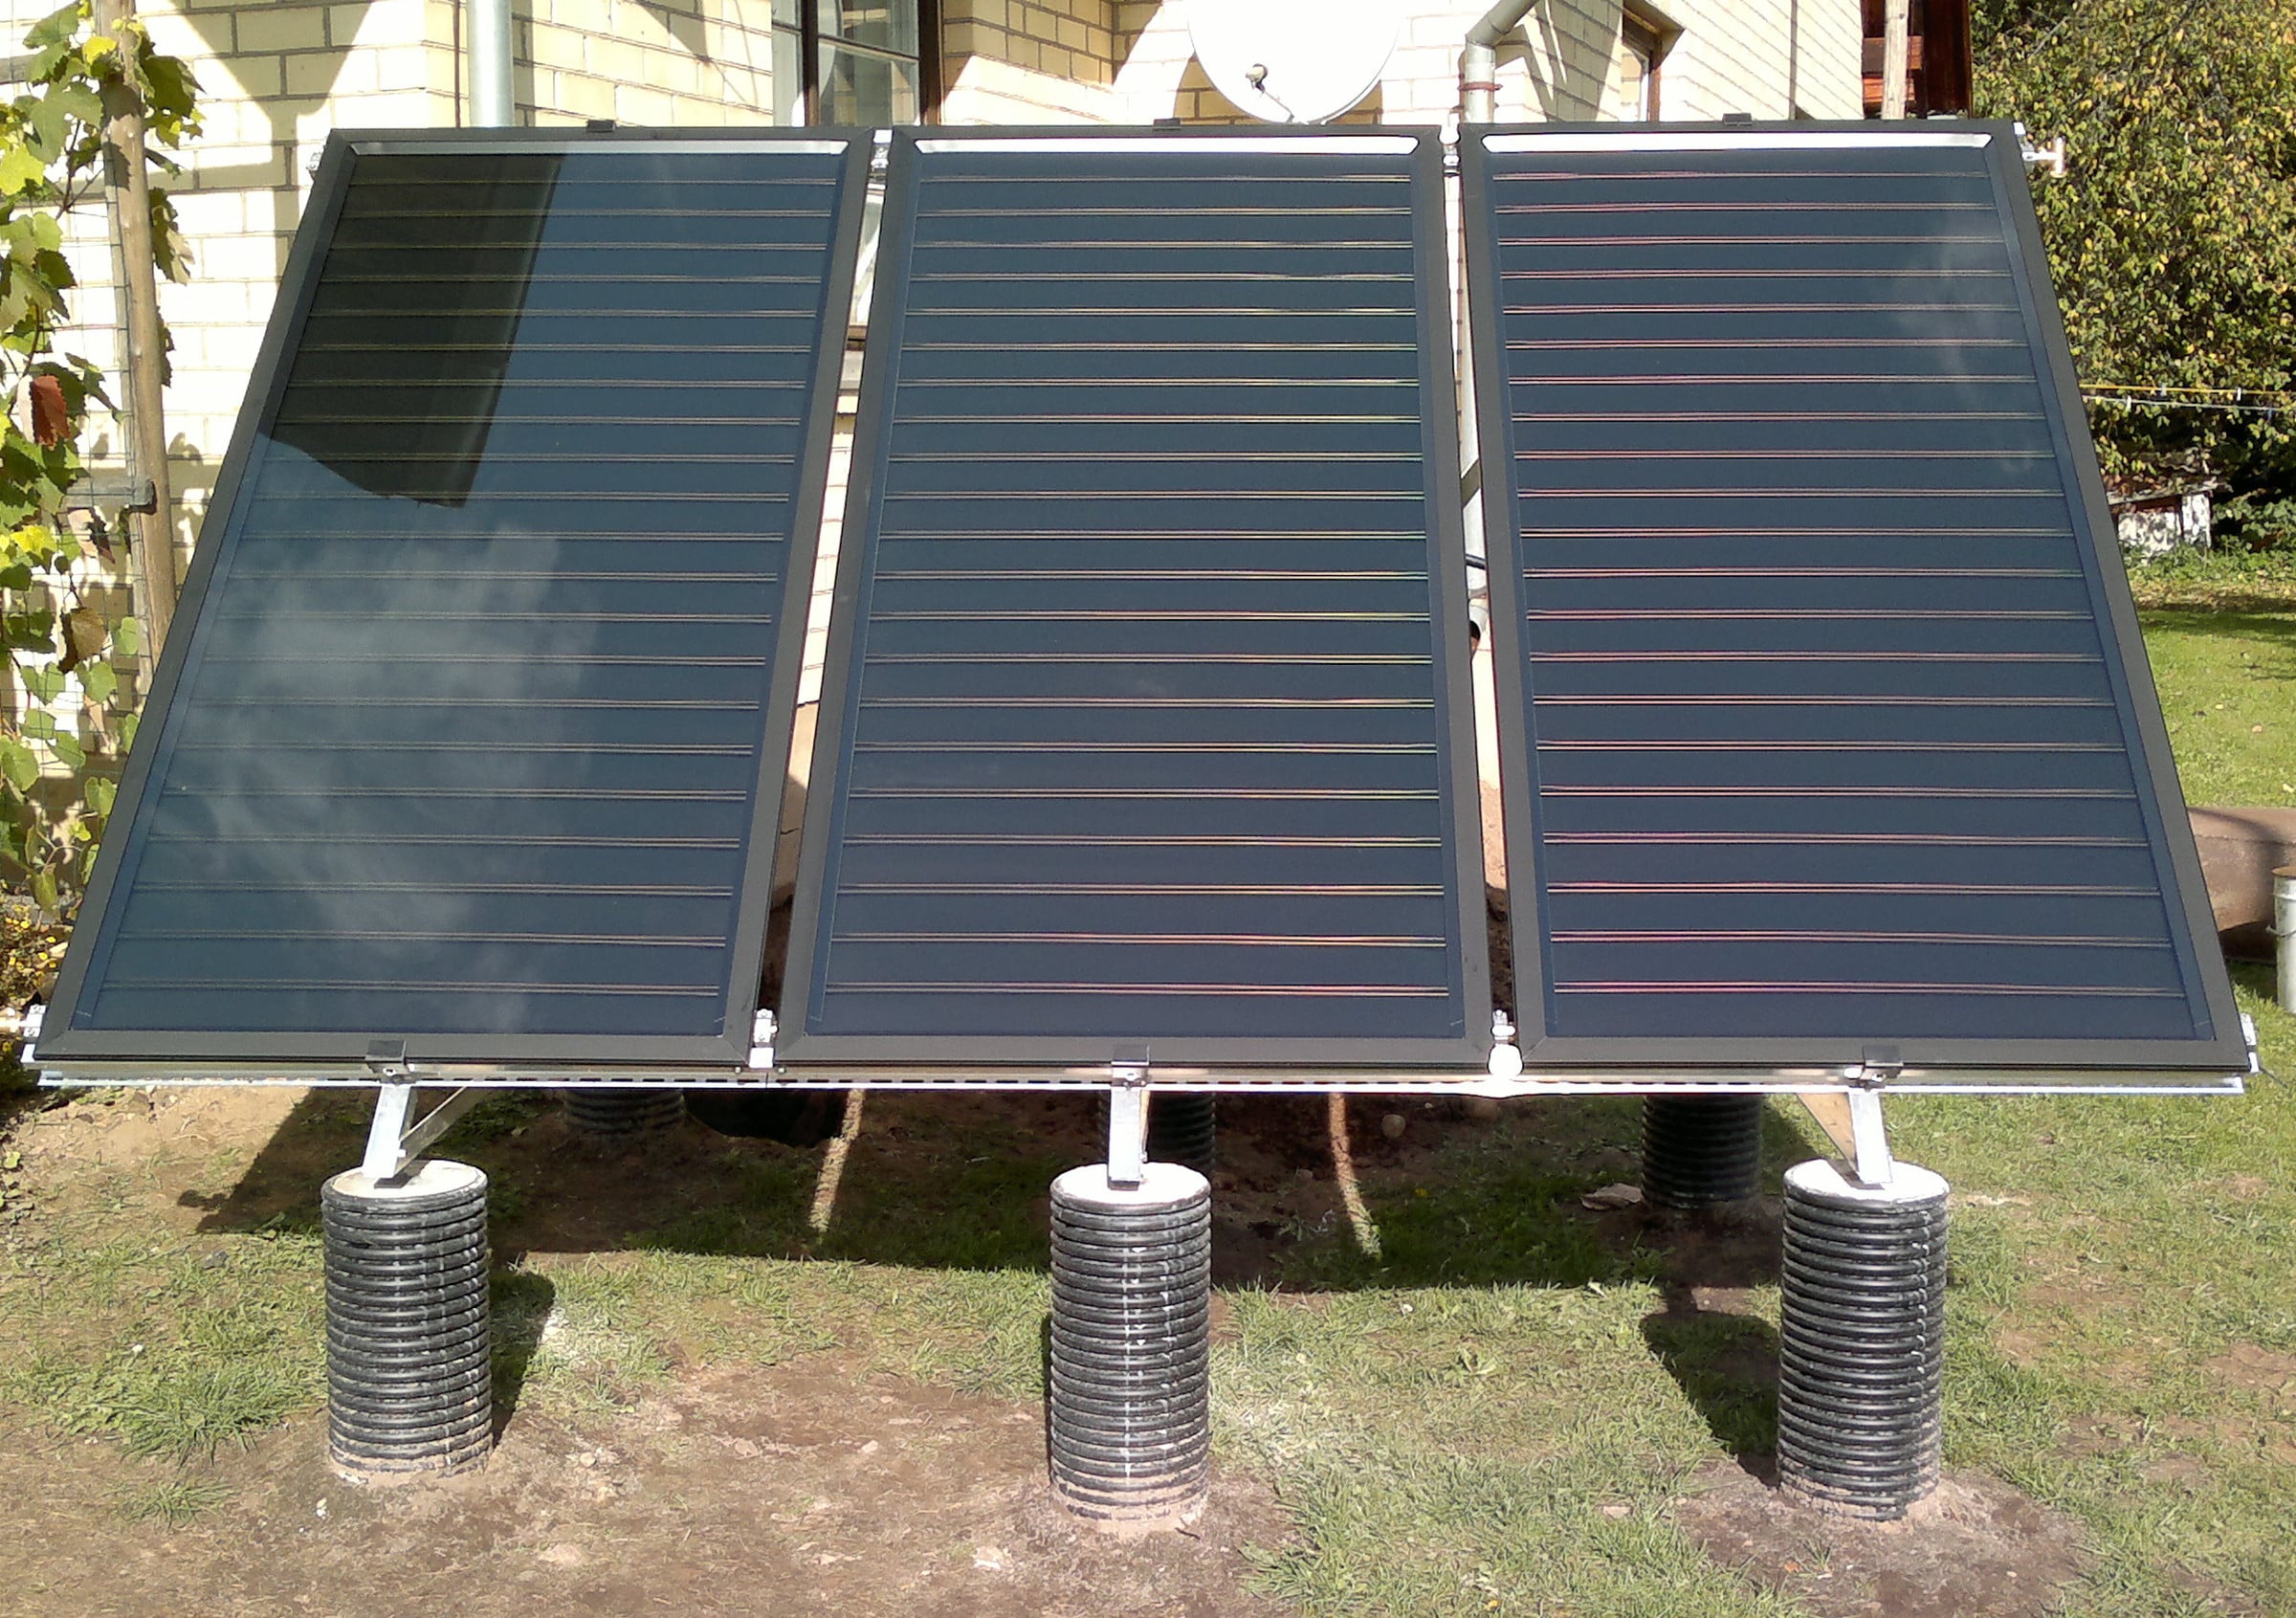 Solar collector system in Jumprava